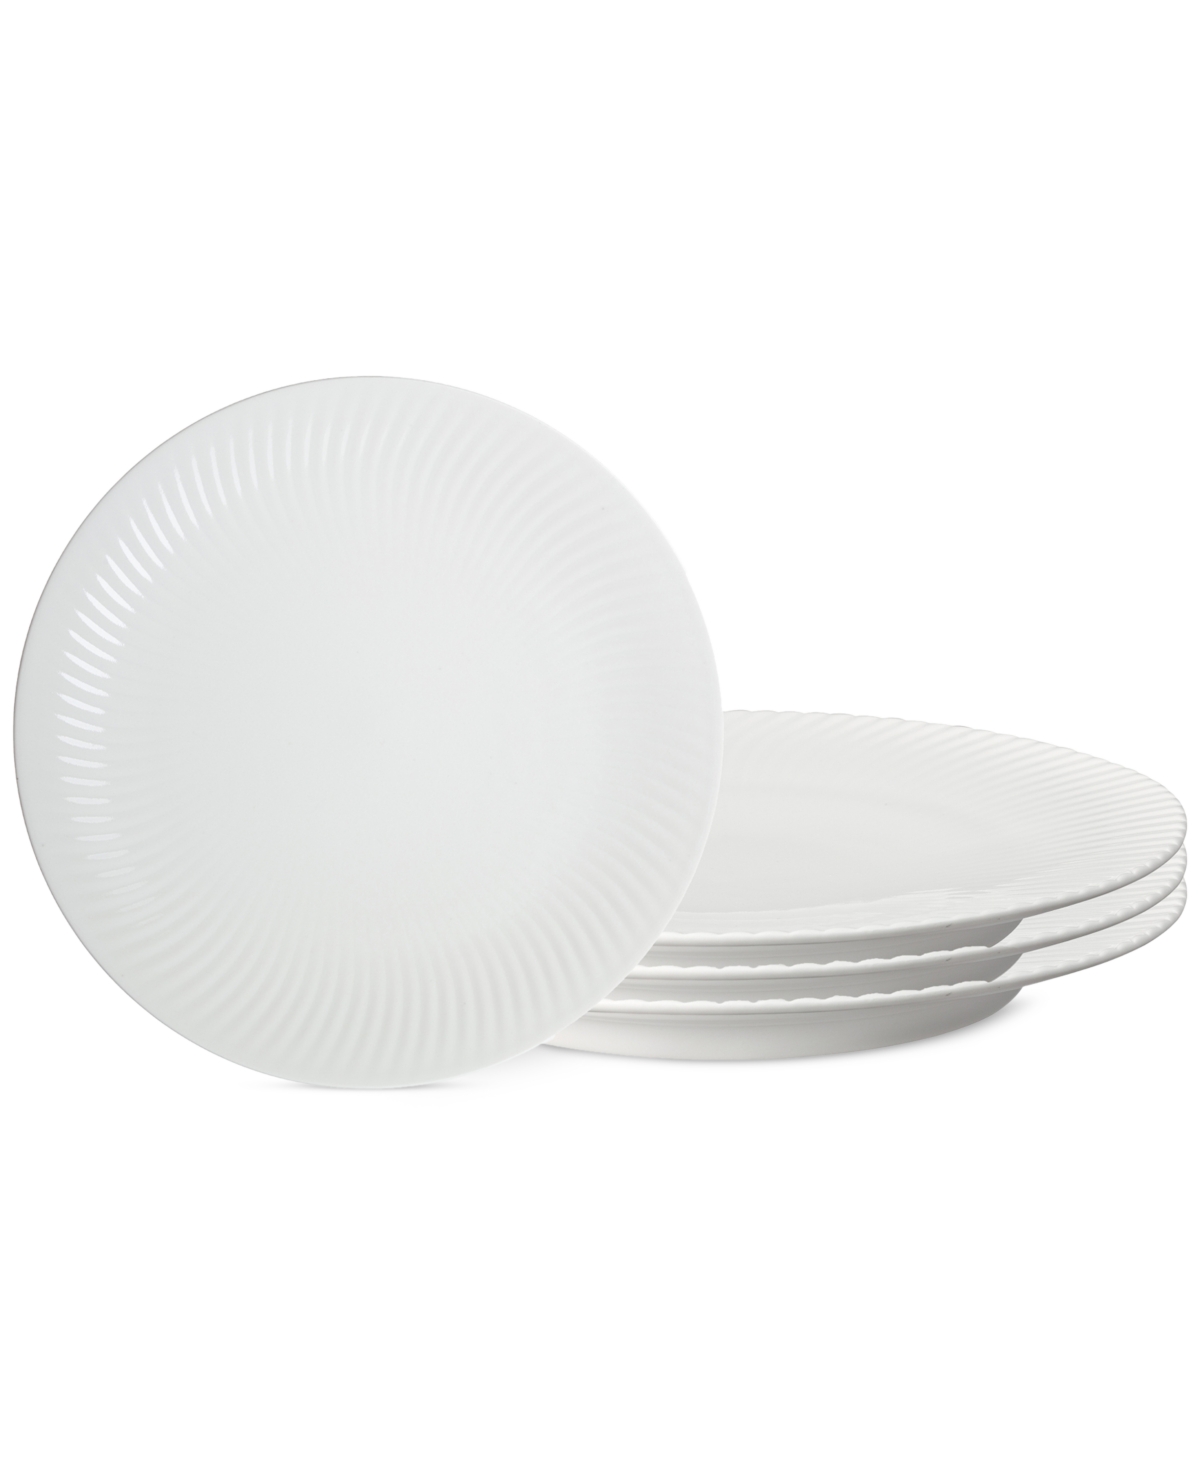 Arc Collection Porcelain Dinner Plates, Set of 4 - Light Grey